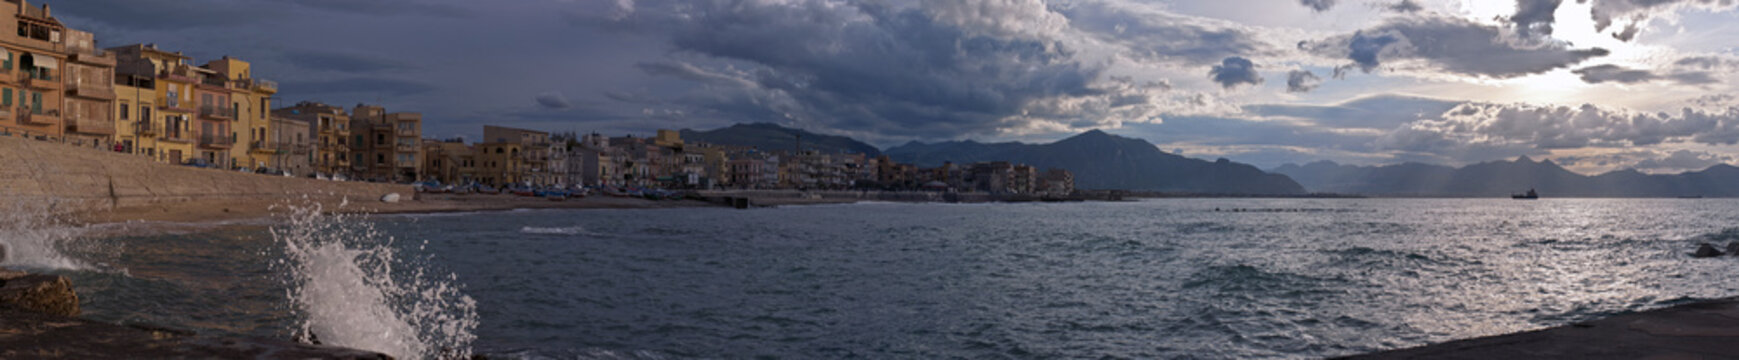 Aspra city and sea